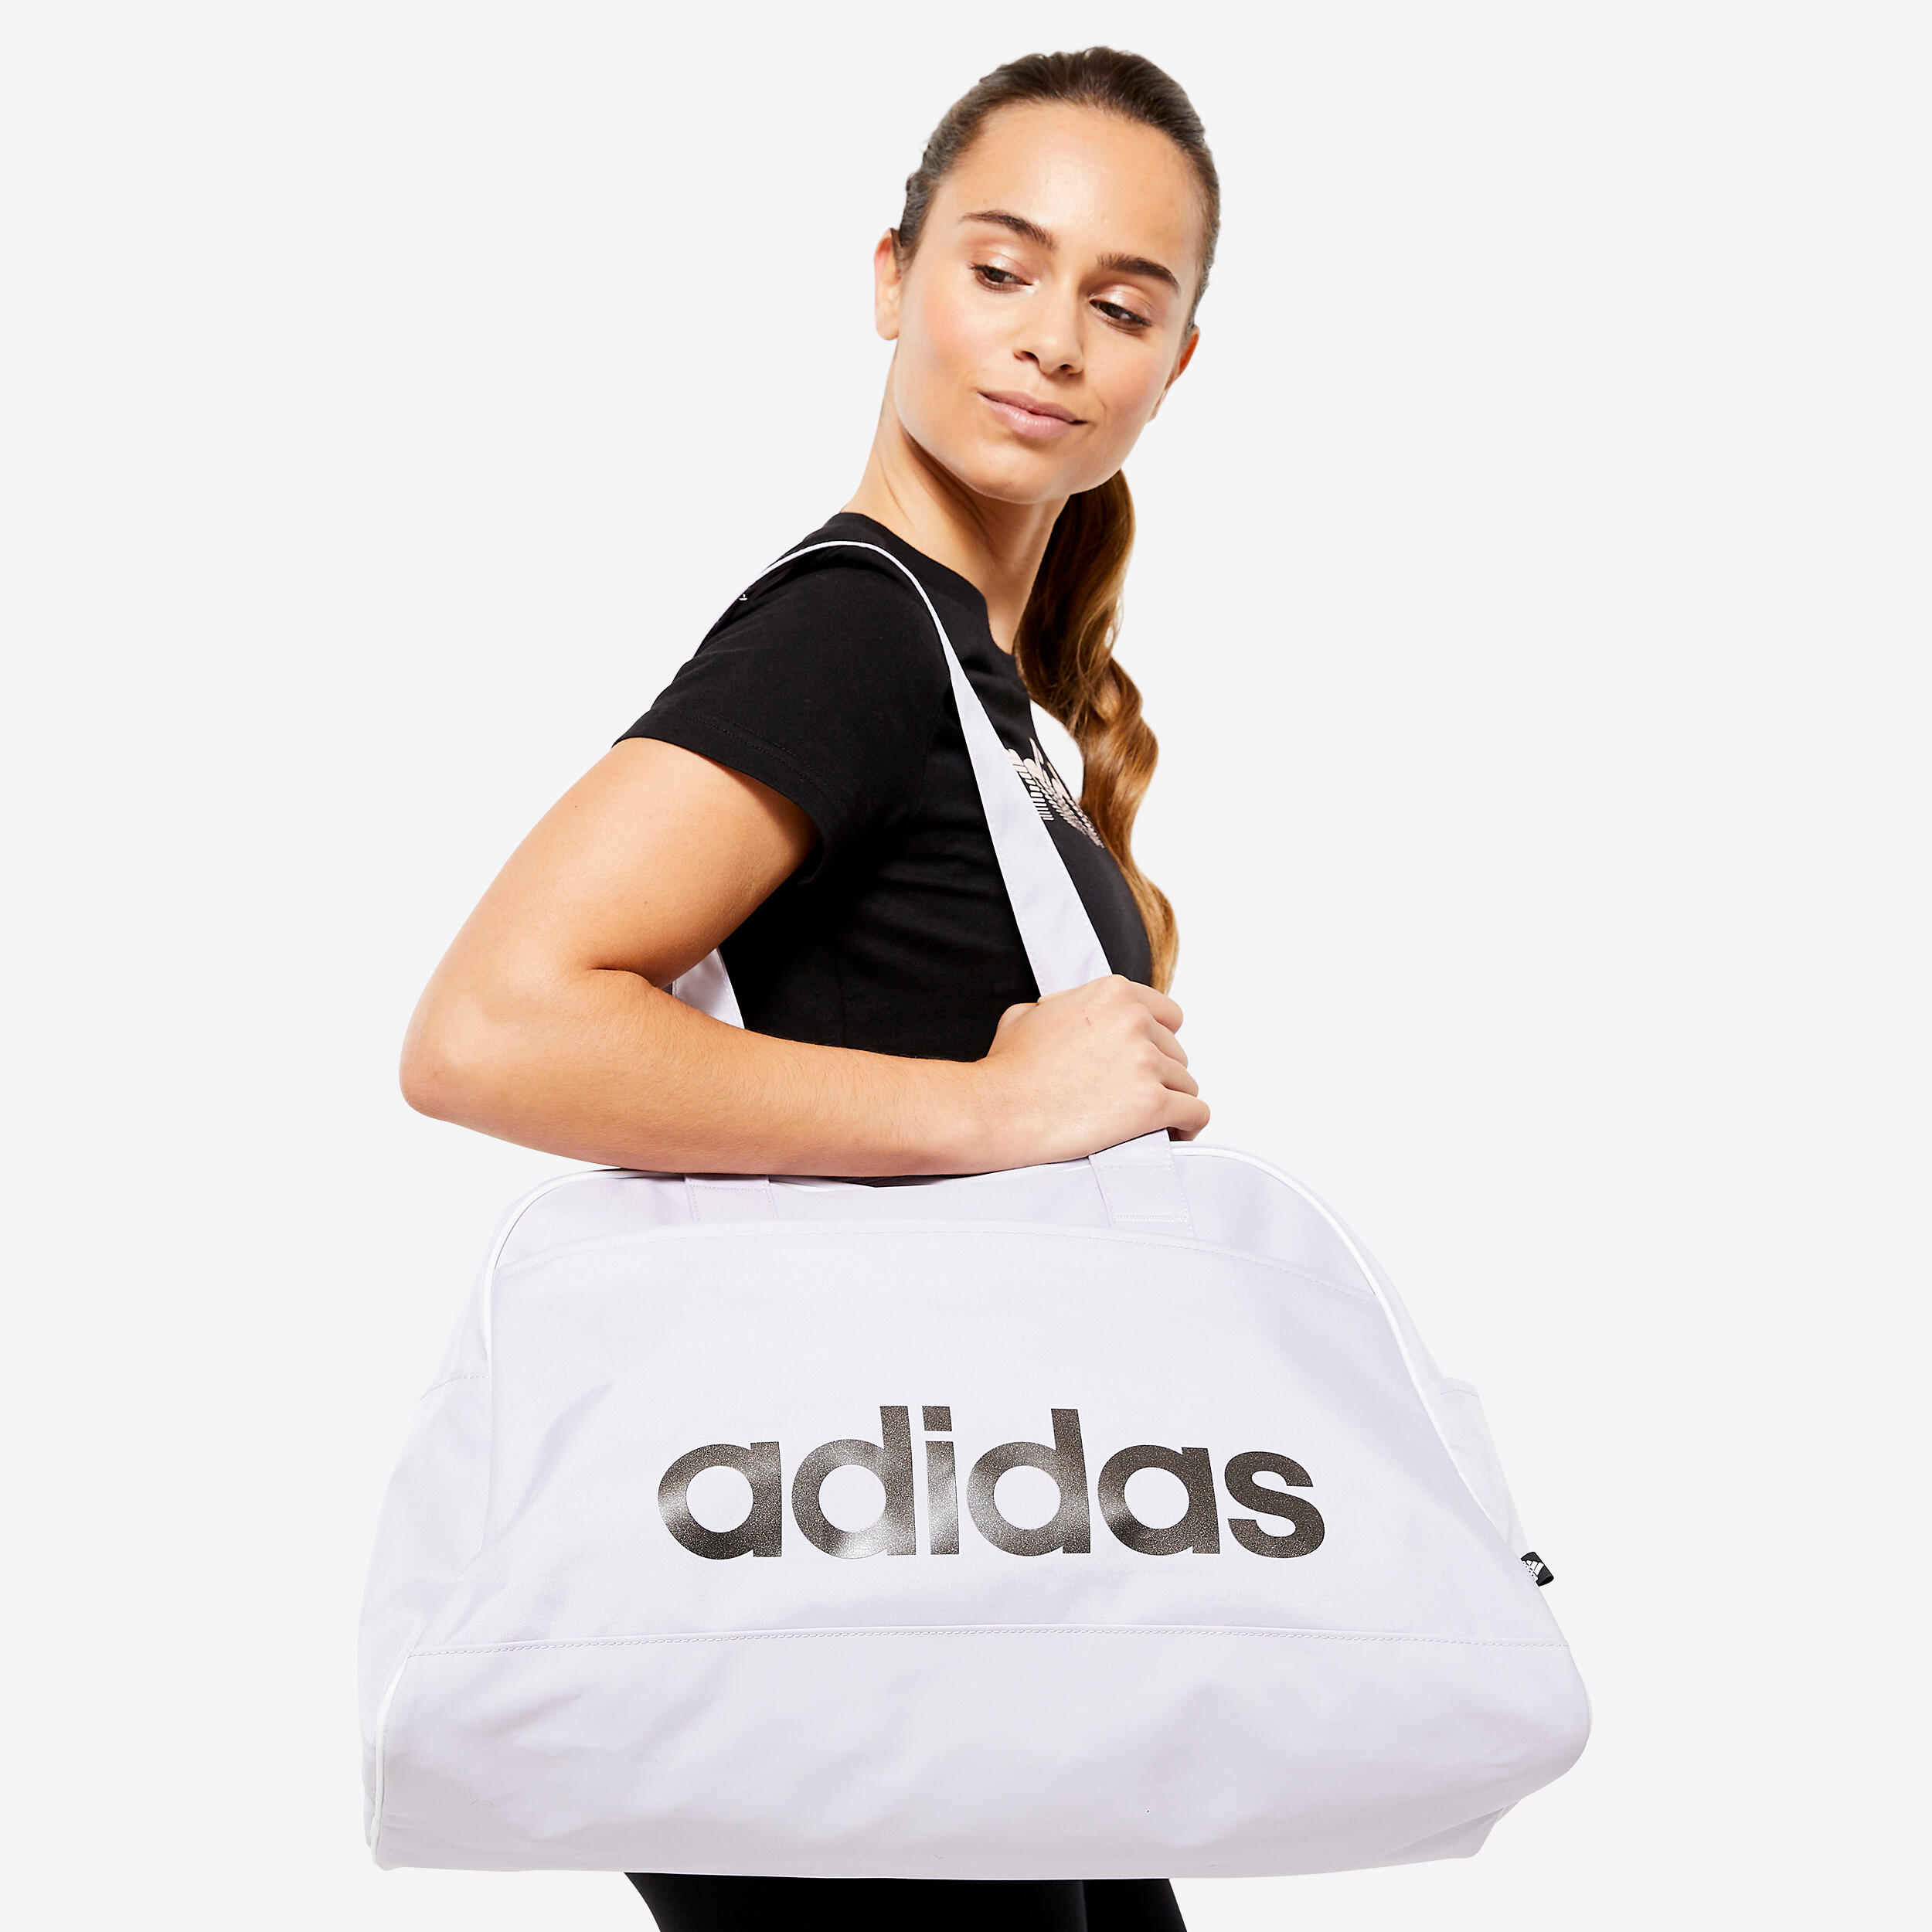 Adidas Duffle Bag Size S - White/black